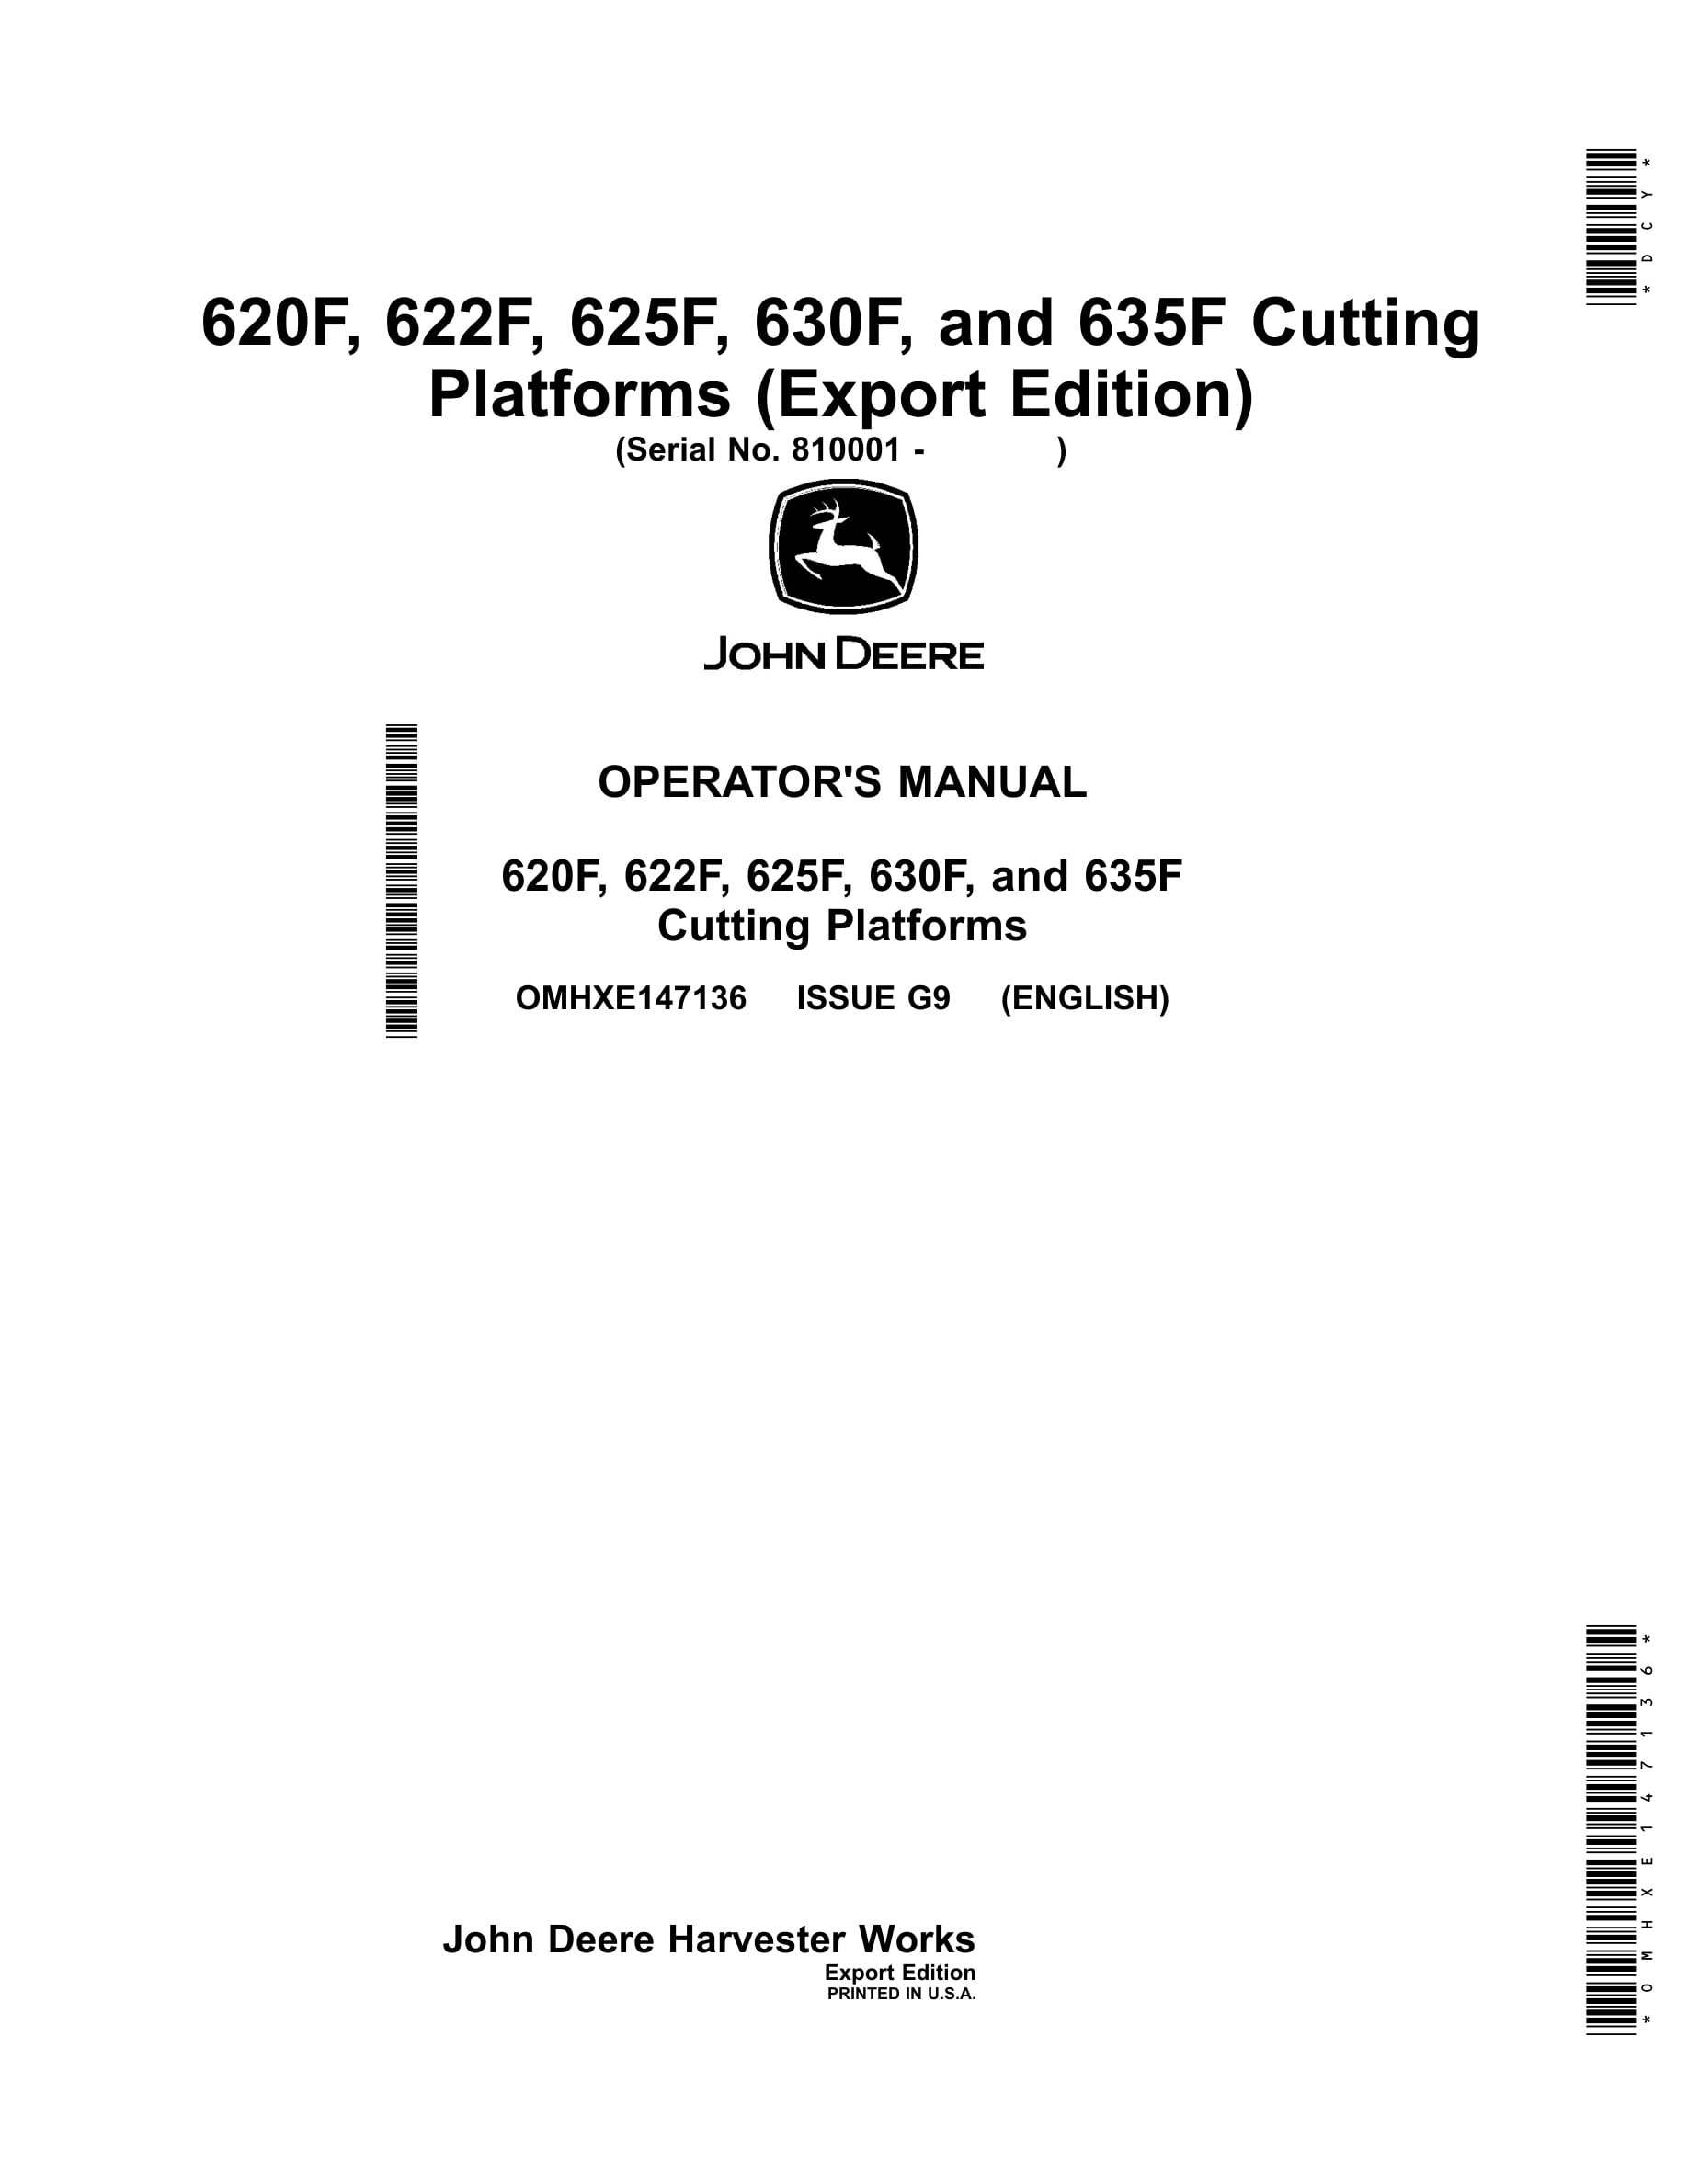 John Deere 620F, 622F, 625F, 630F, and 635F Cutting Platforms Operator Manual OMHXE147136-1